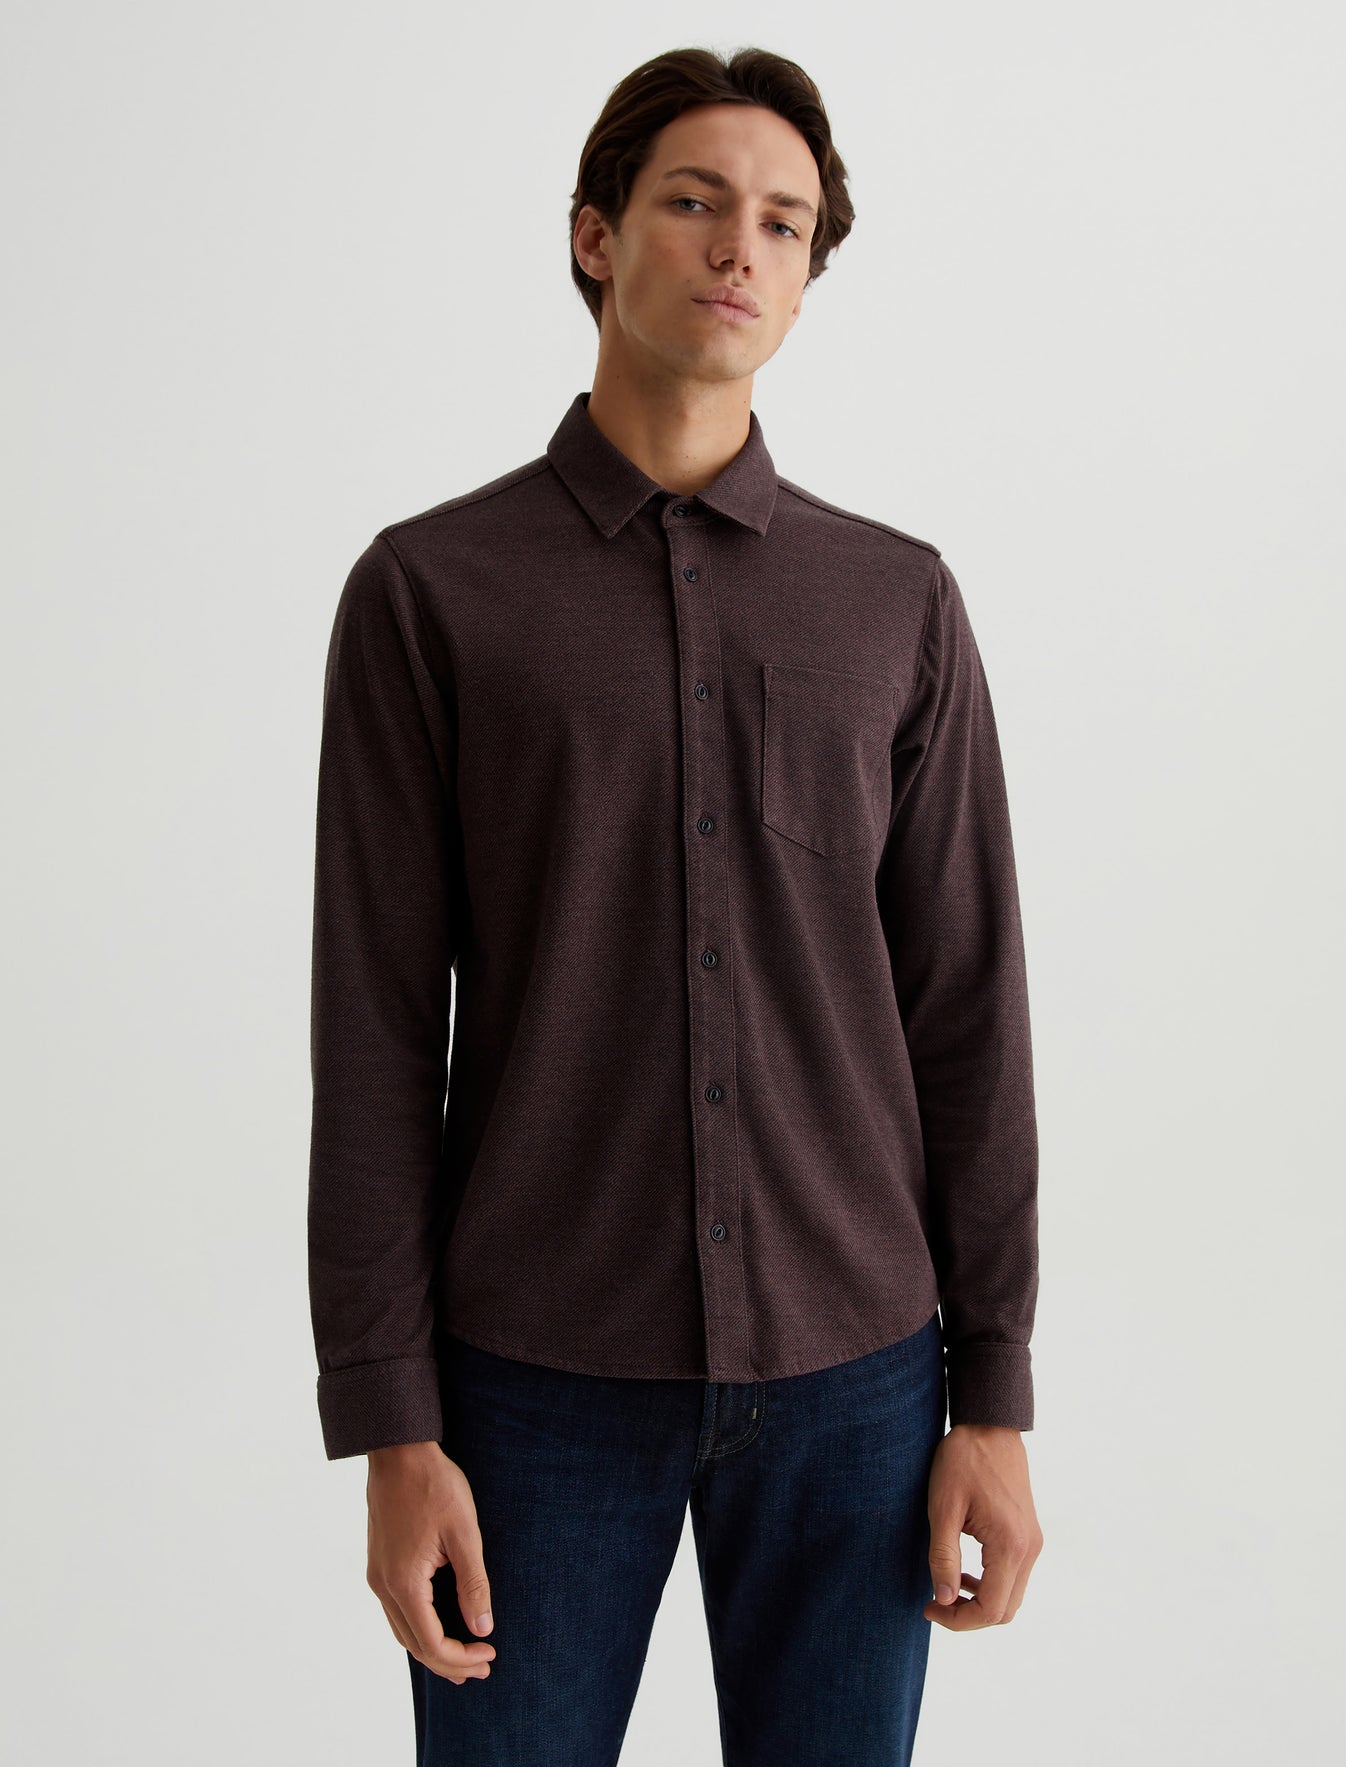 Mason Shirt Heather Charcoal/Dark Plum Classic Fit Long Sleeve Button Up Shirt Mens Top Photo 1